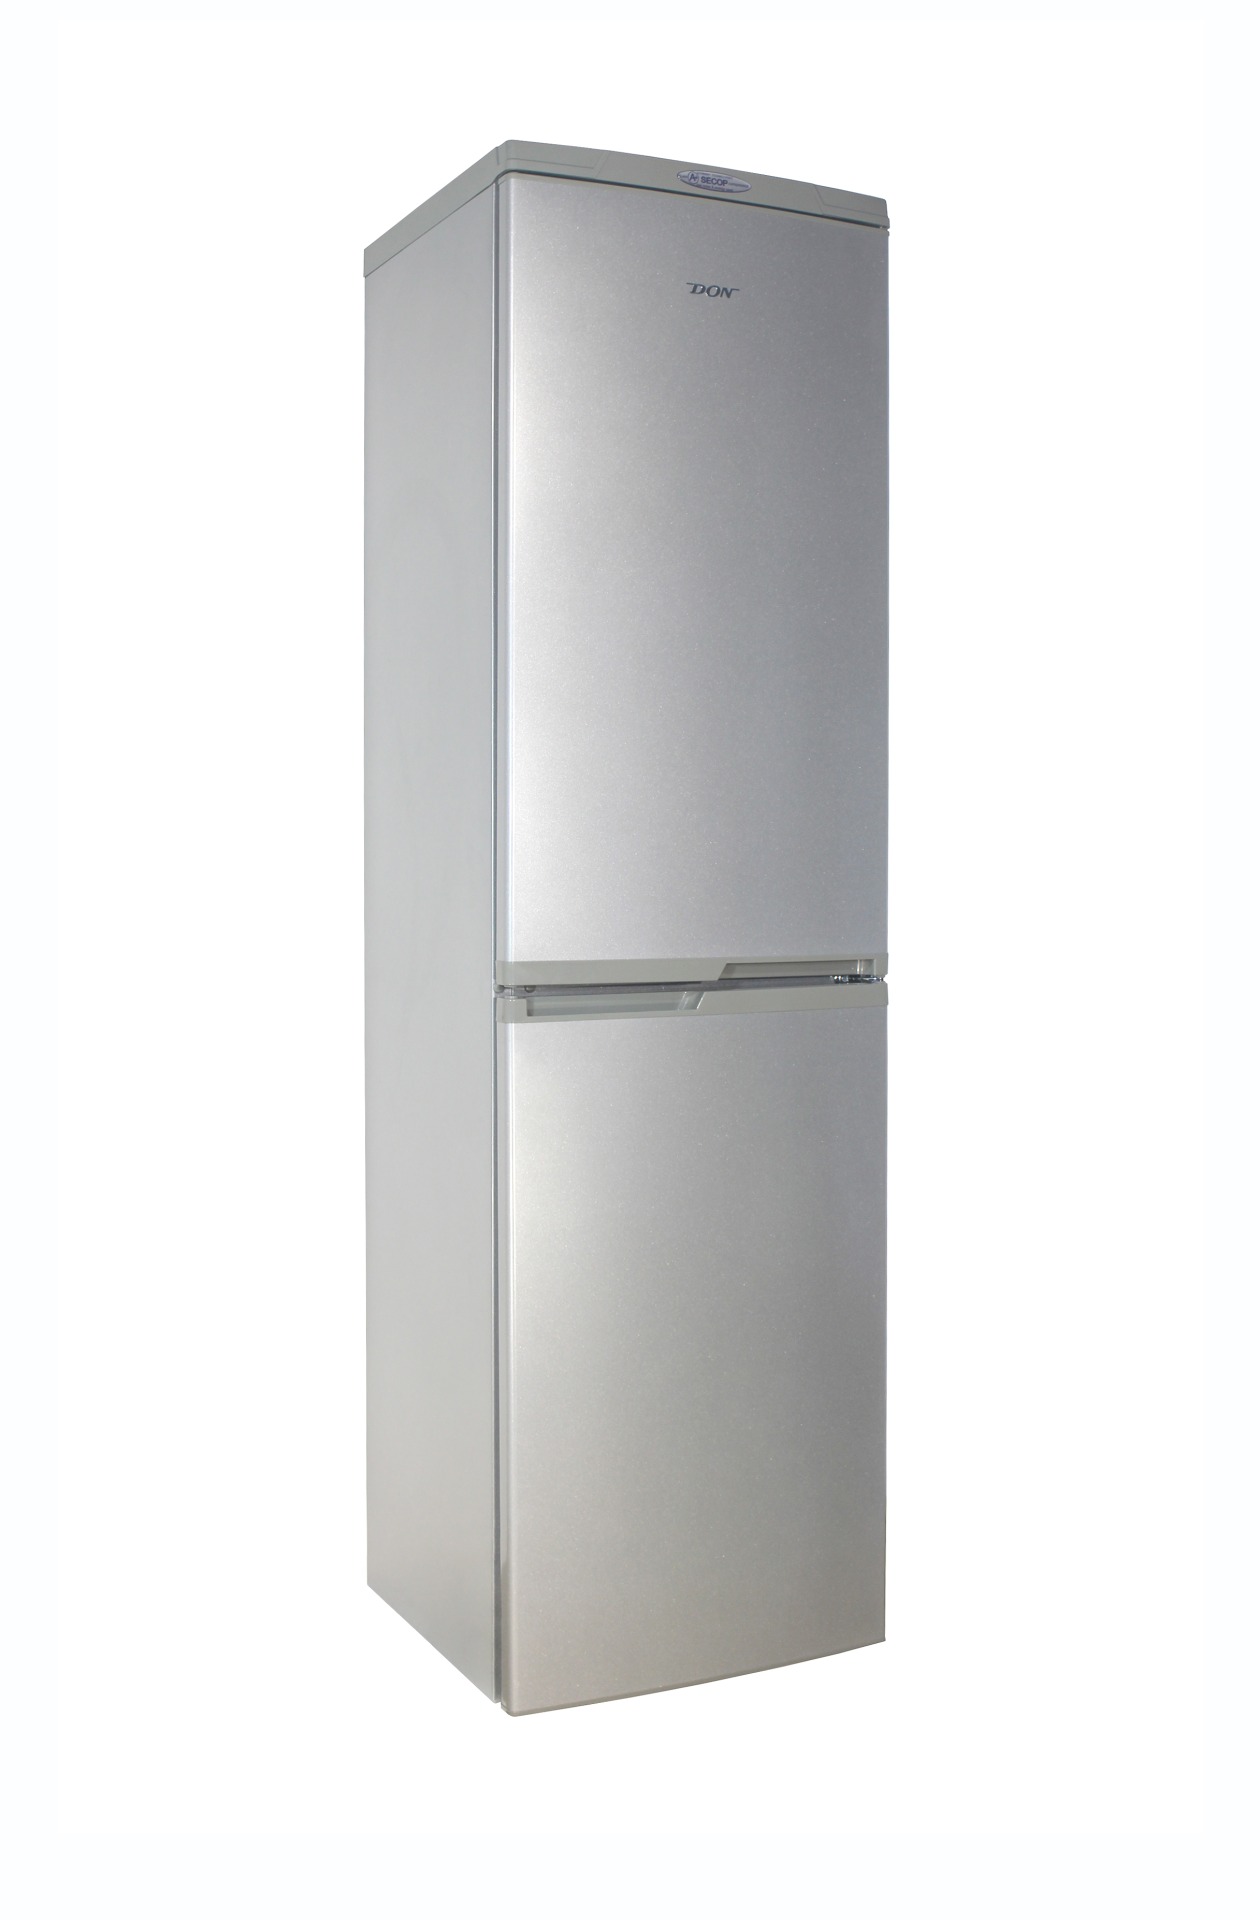 Холодильник DON R-297 серый холодильник бирюса fd 431 i двухкамерный класс а 562 л серый